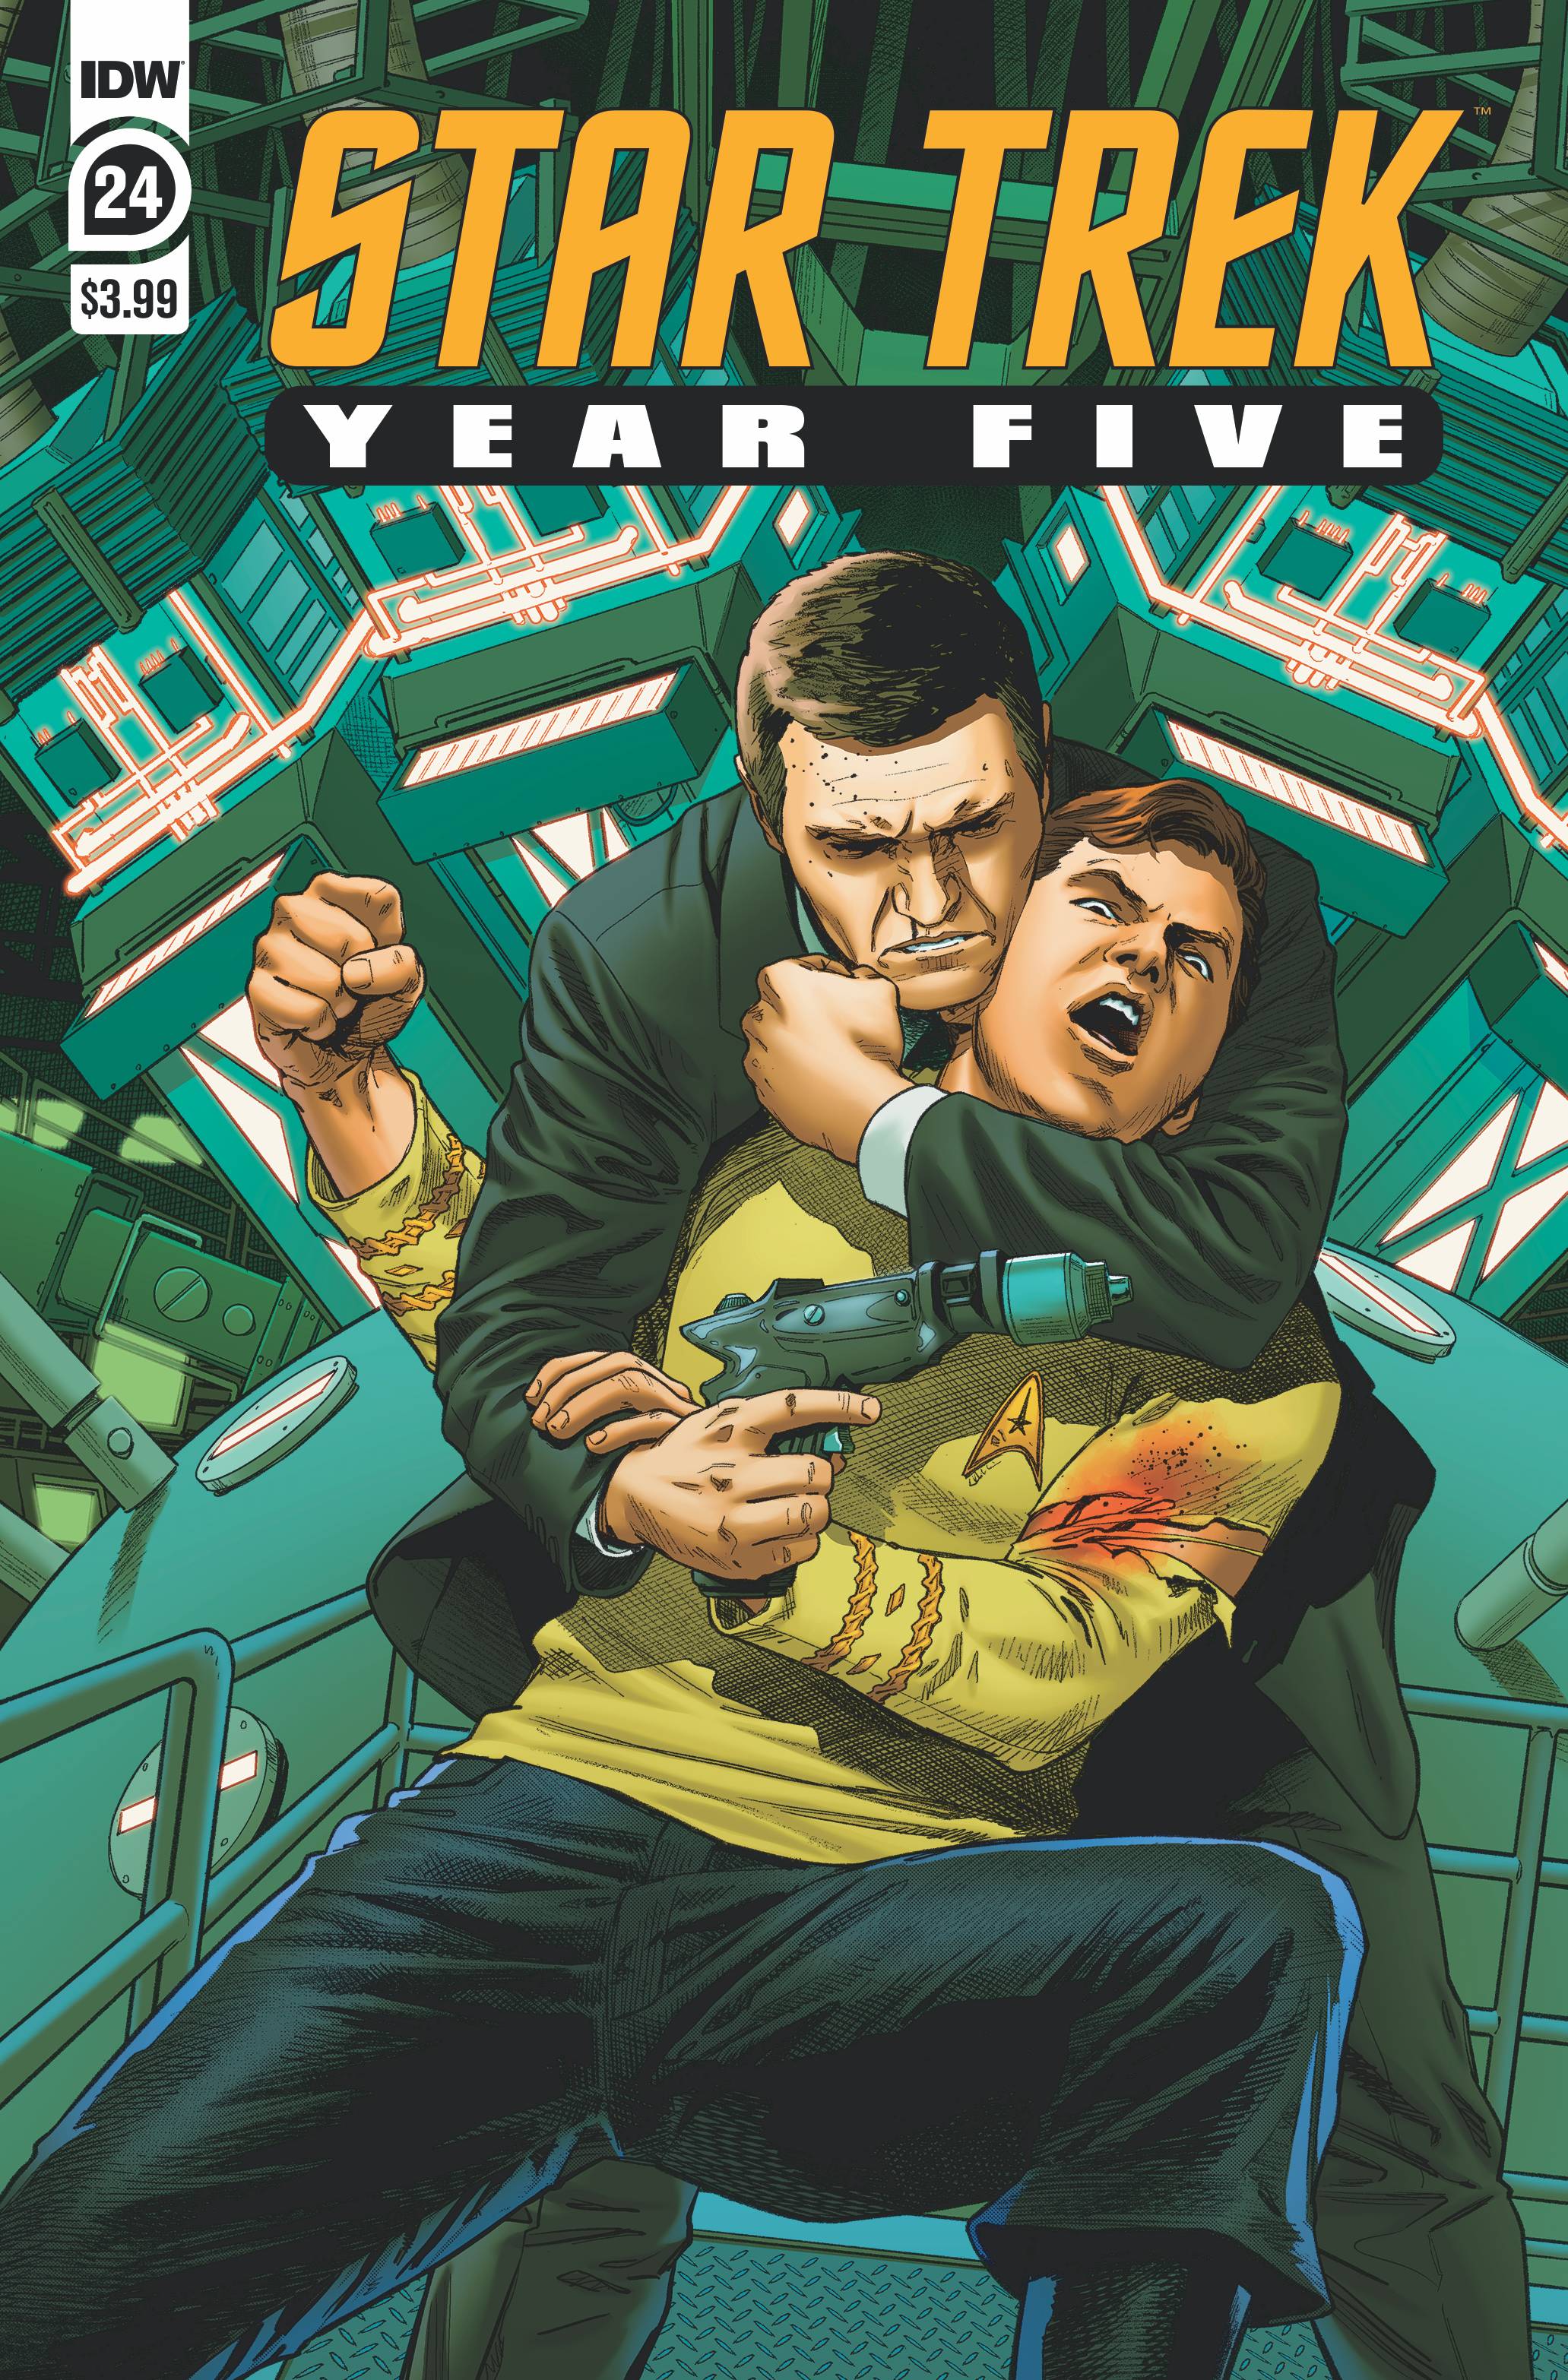 Star Trek Year Five Volume 24